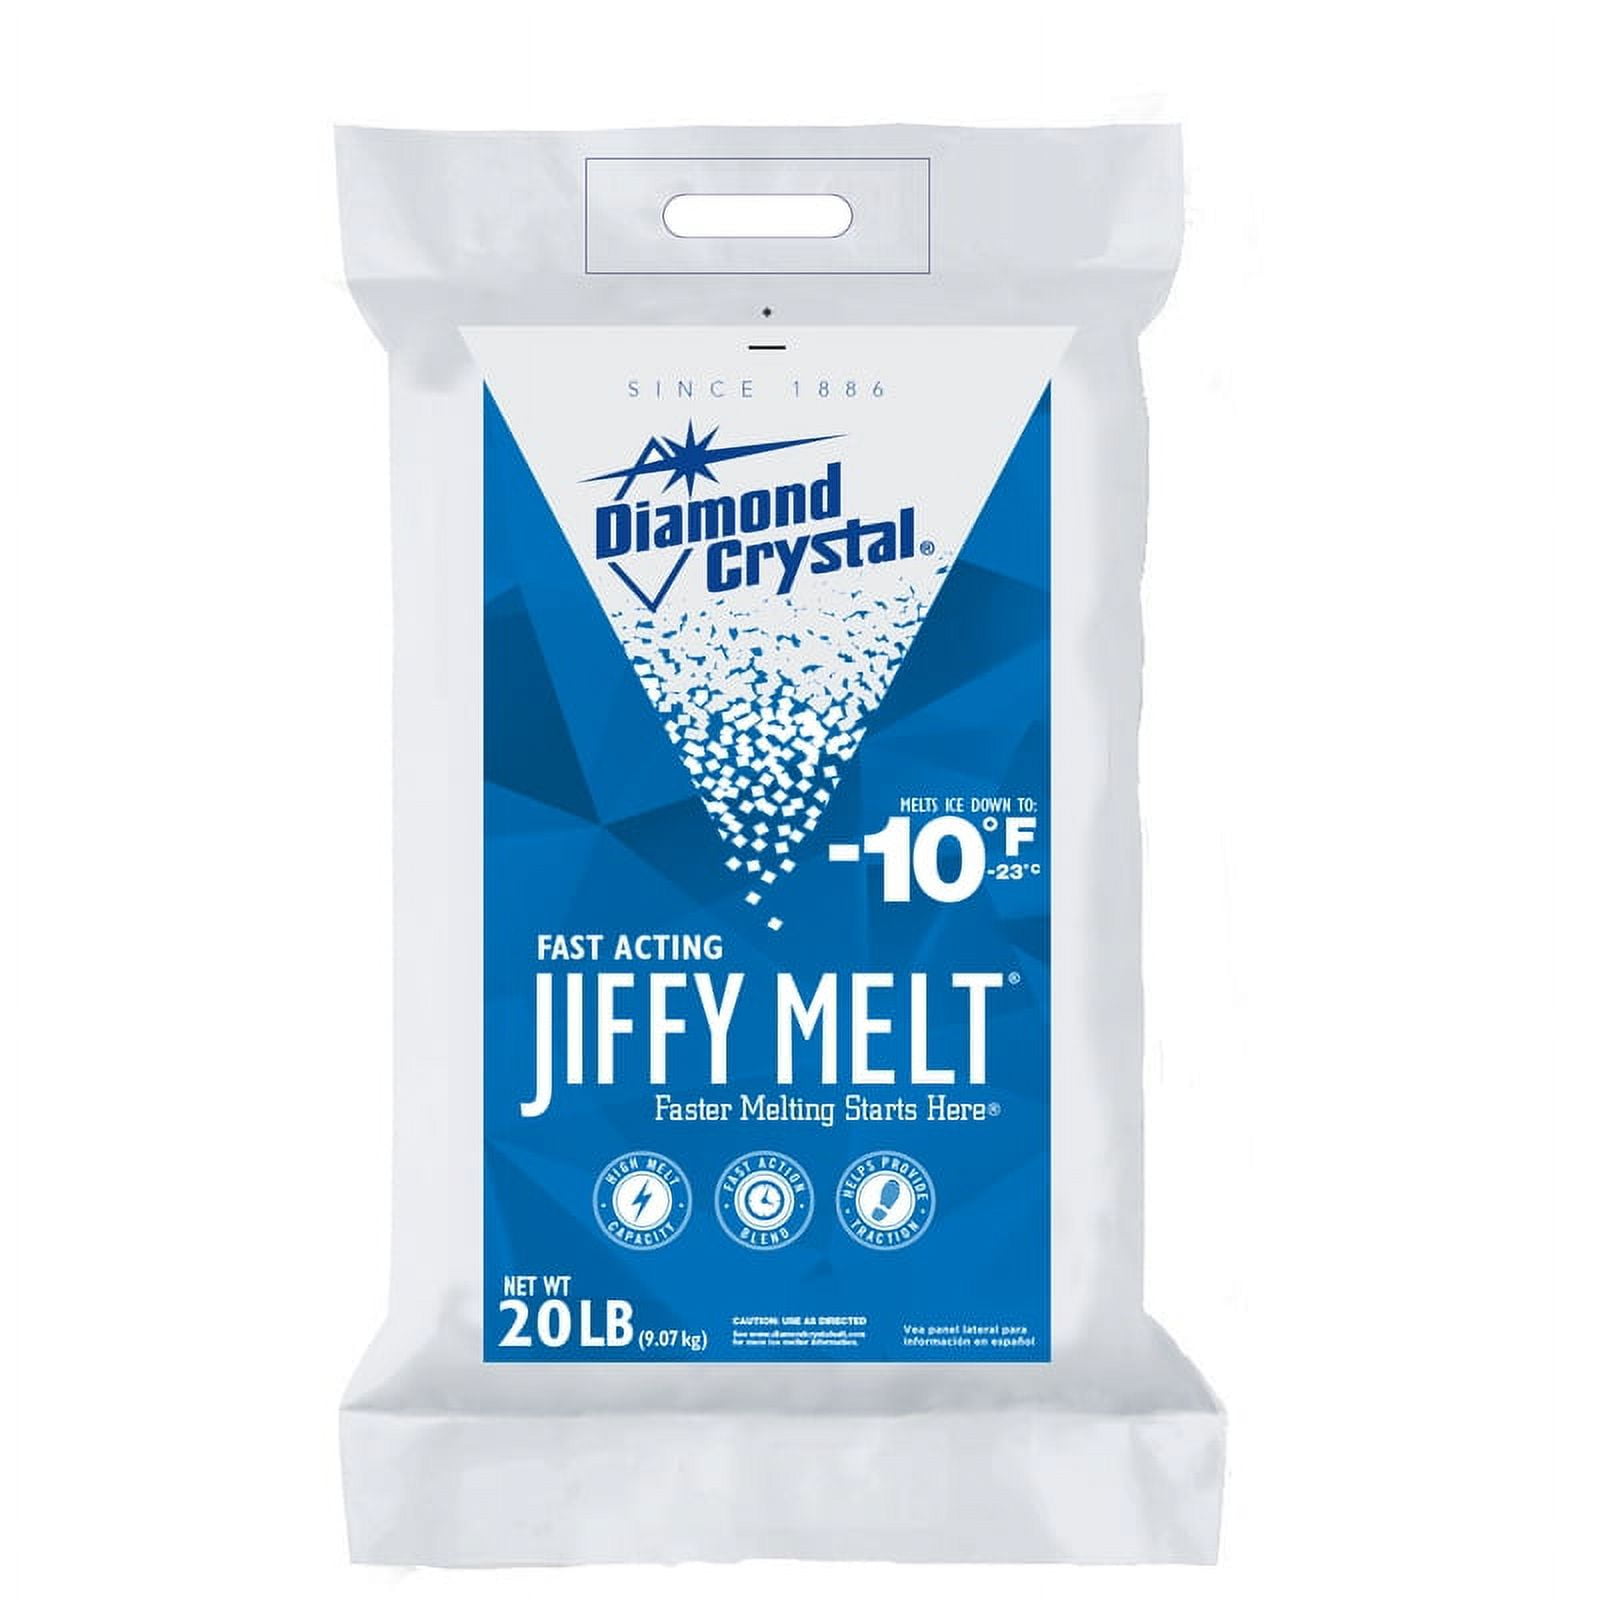 Diamond Crystal, GNR11545, Jiffy Melt Ice Melt Salt Blend, 1 Bag, Blue,White